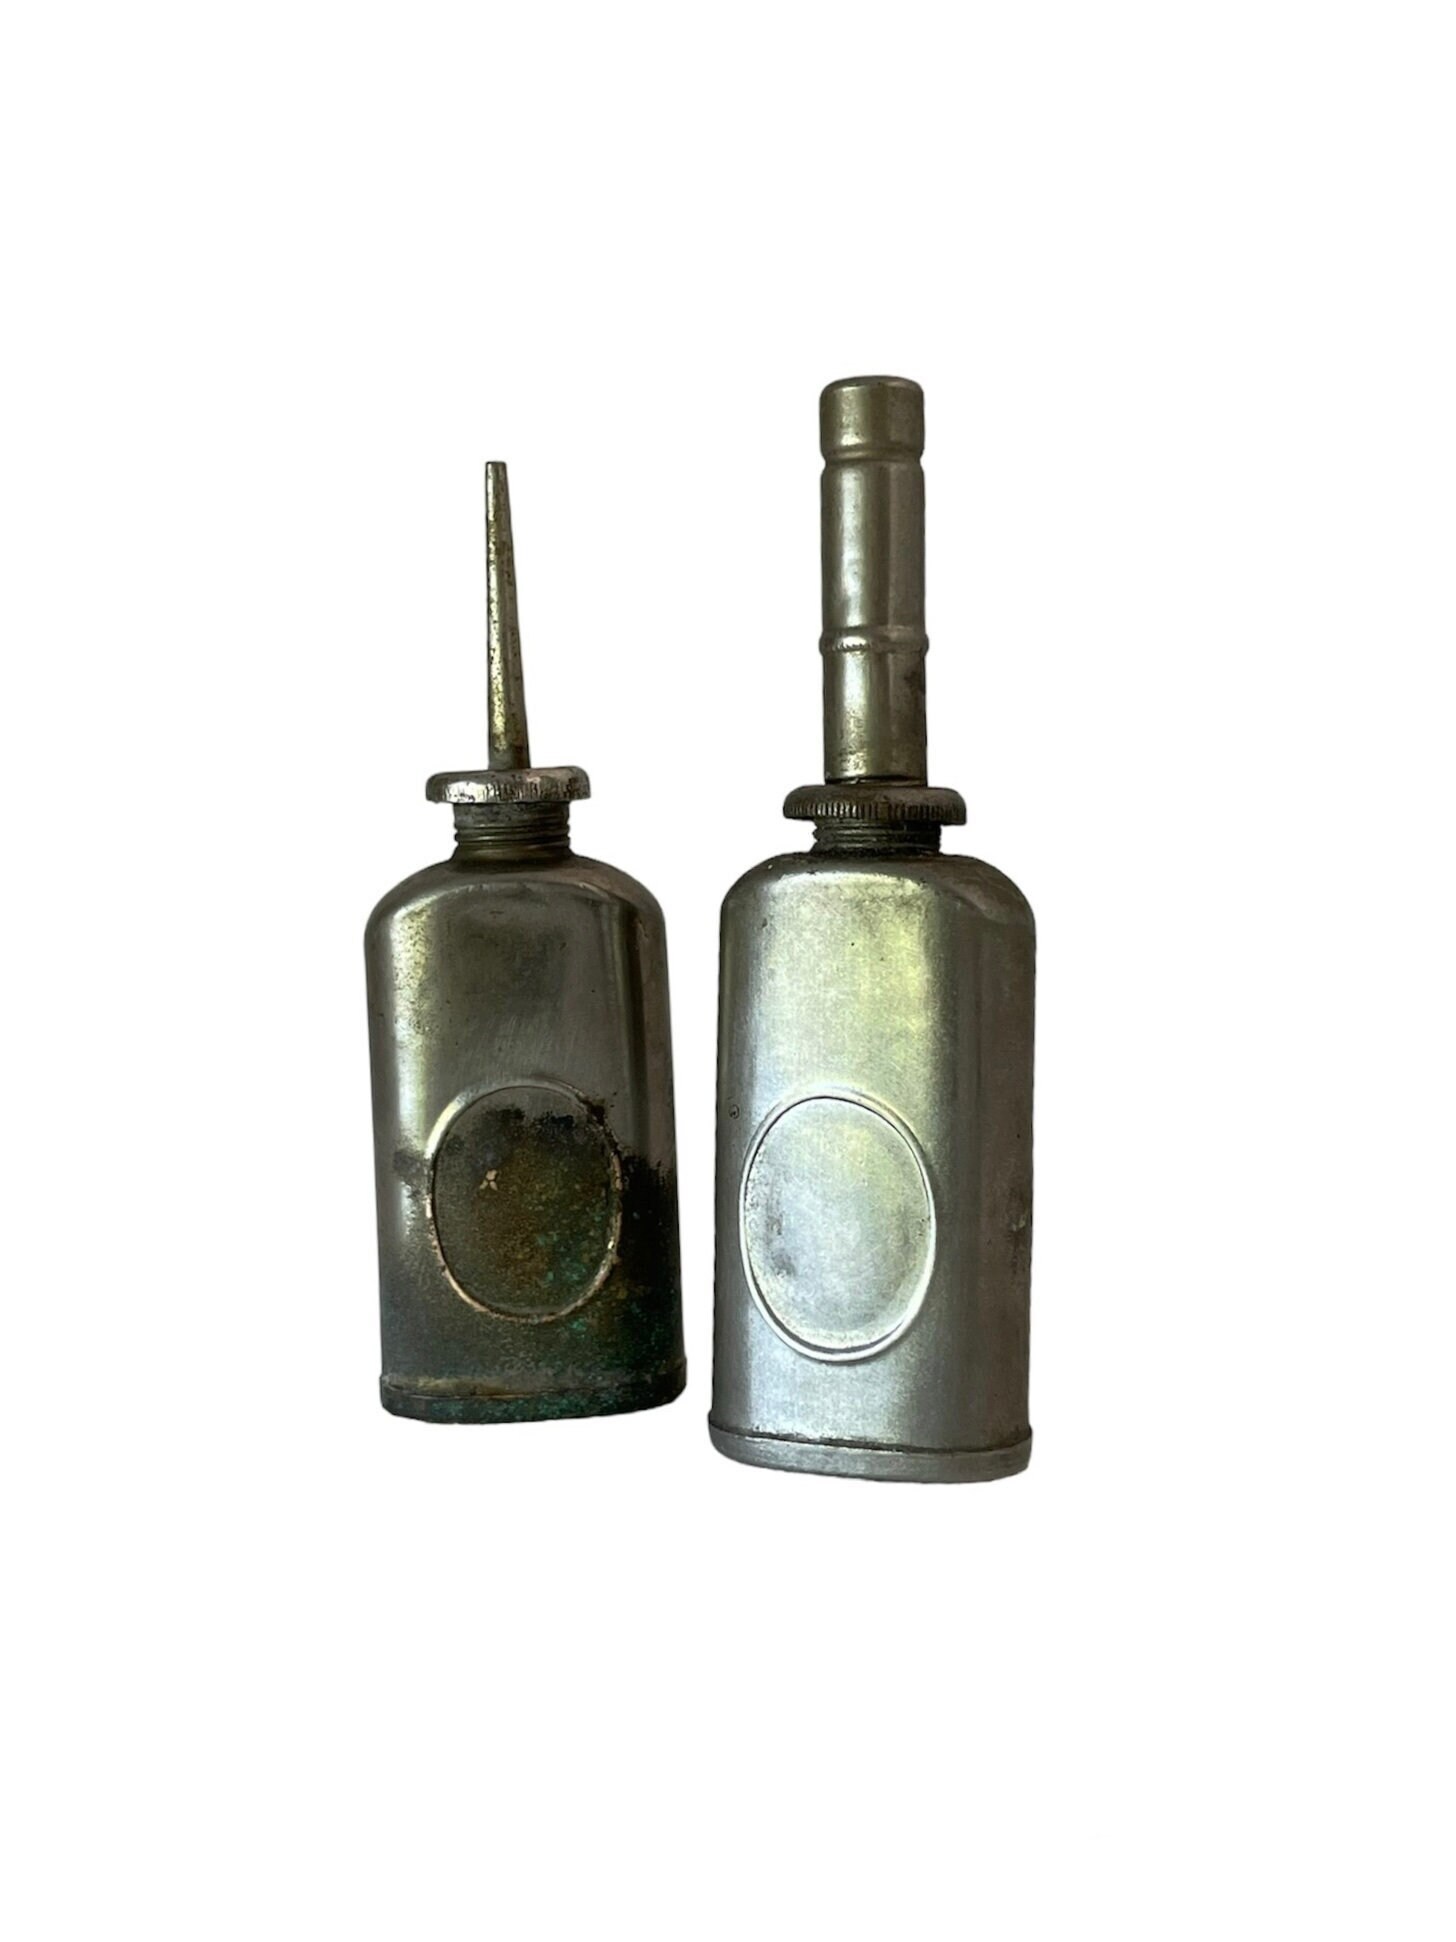 Pocket oiler containing clock oil